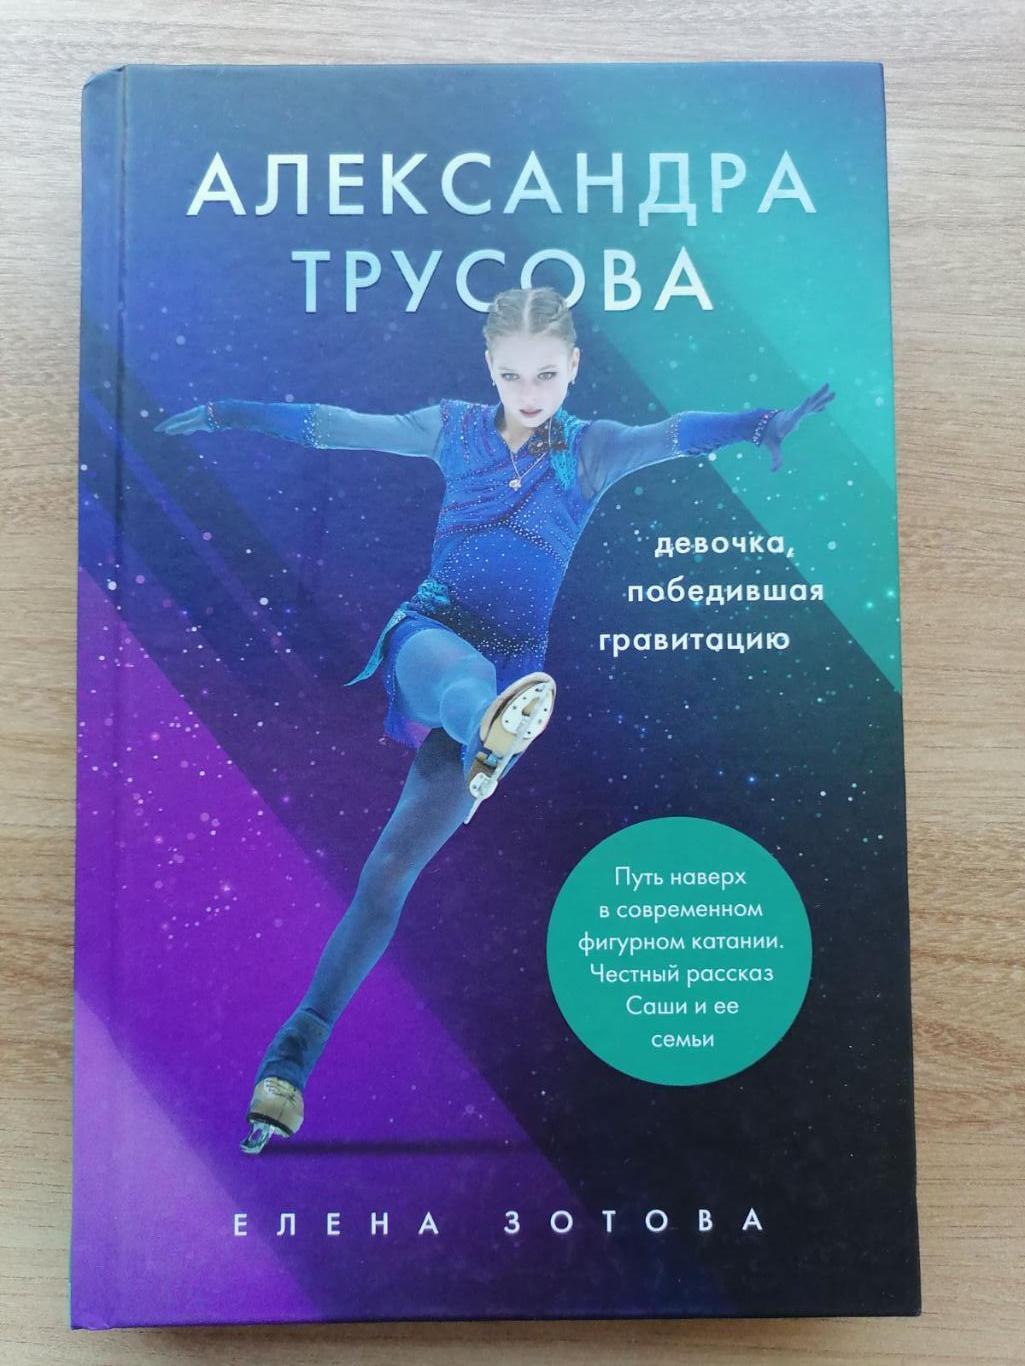 Зотова - Александра Трусова девочка победившая гравитацию